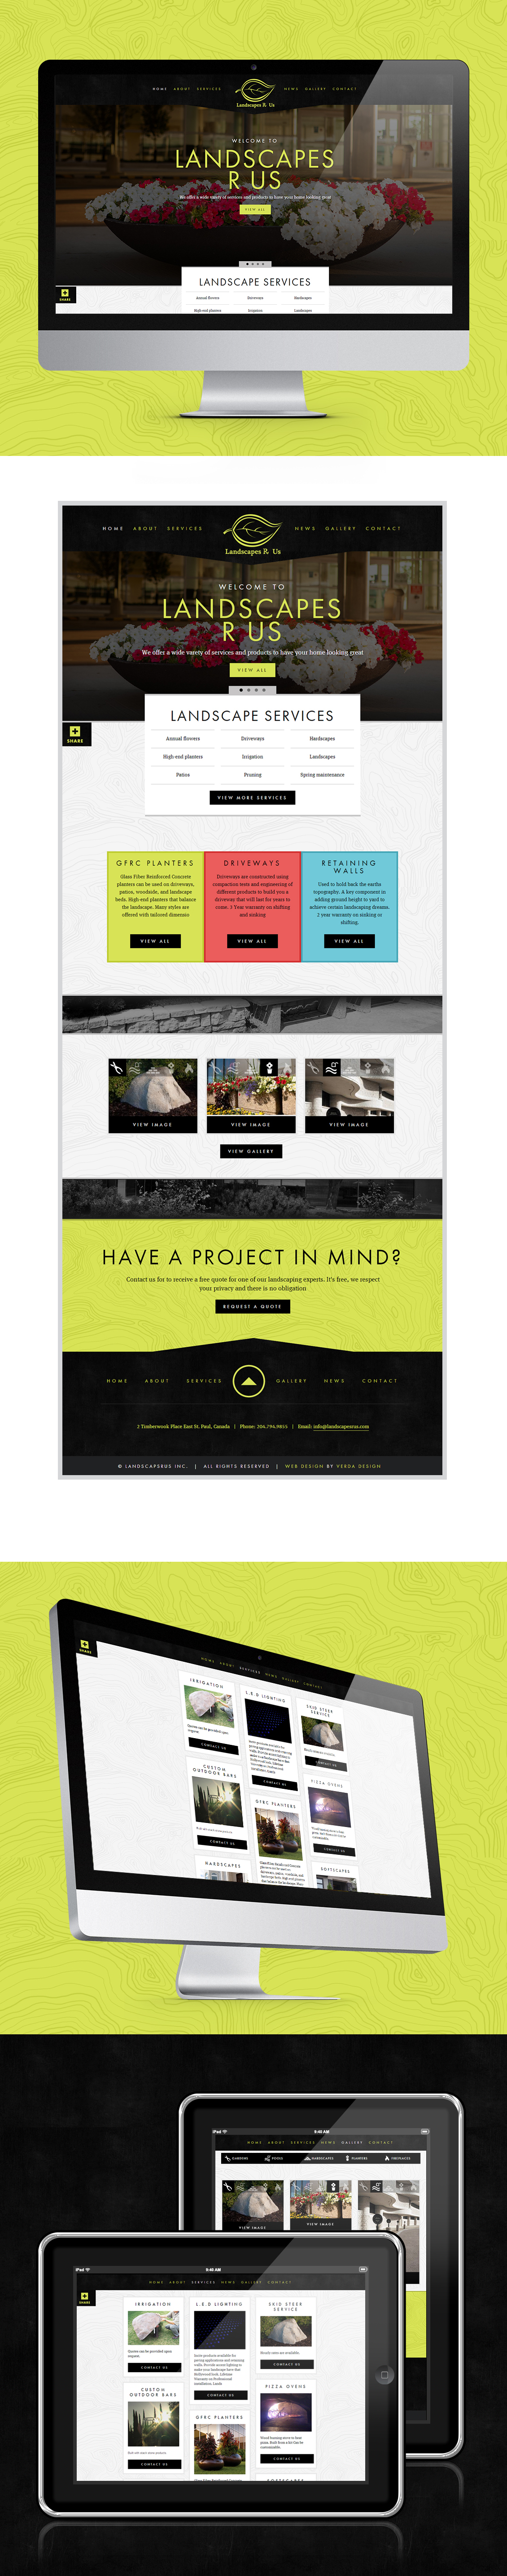 winnipeg-web-site-design.jpg